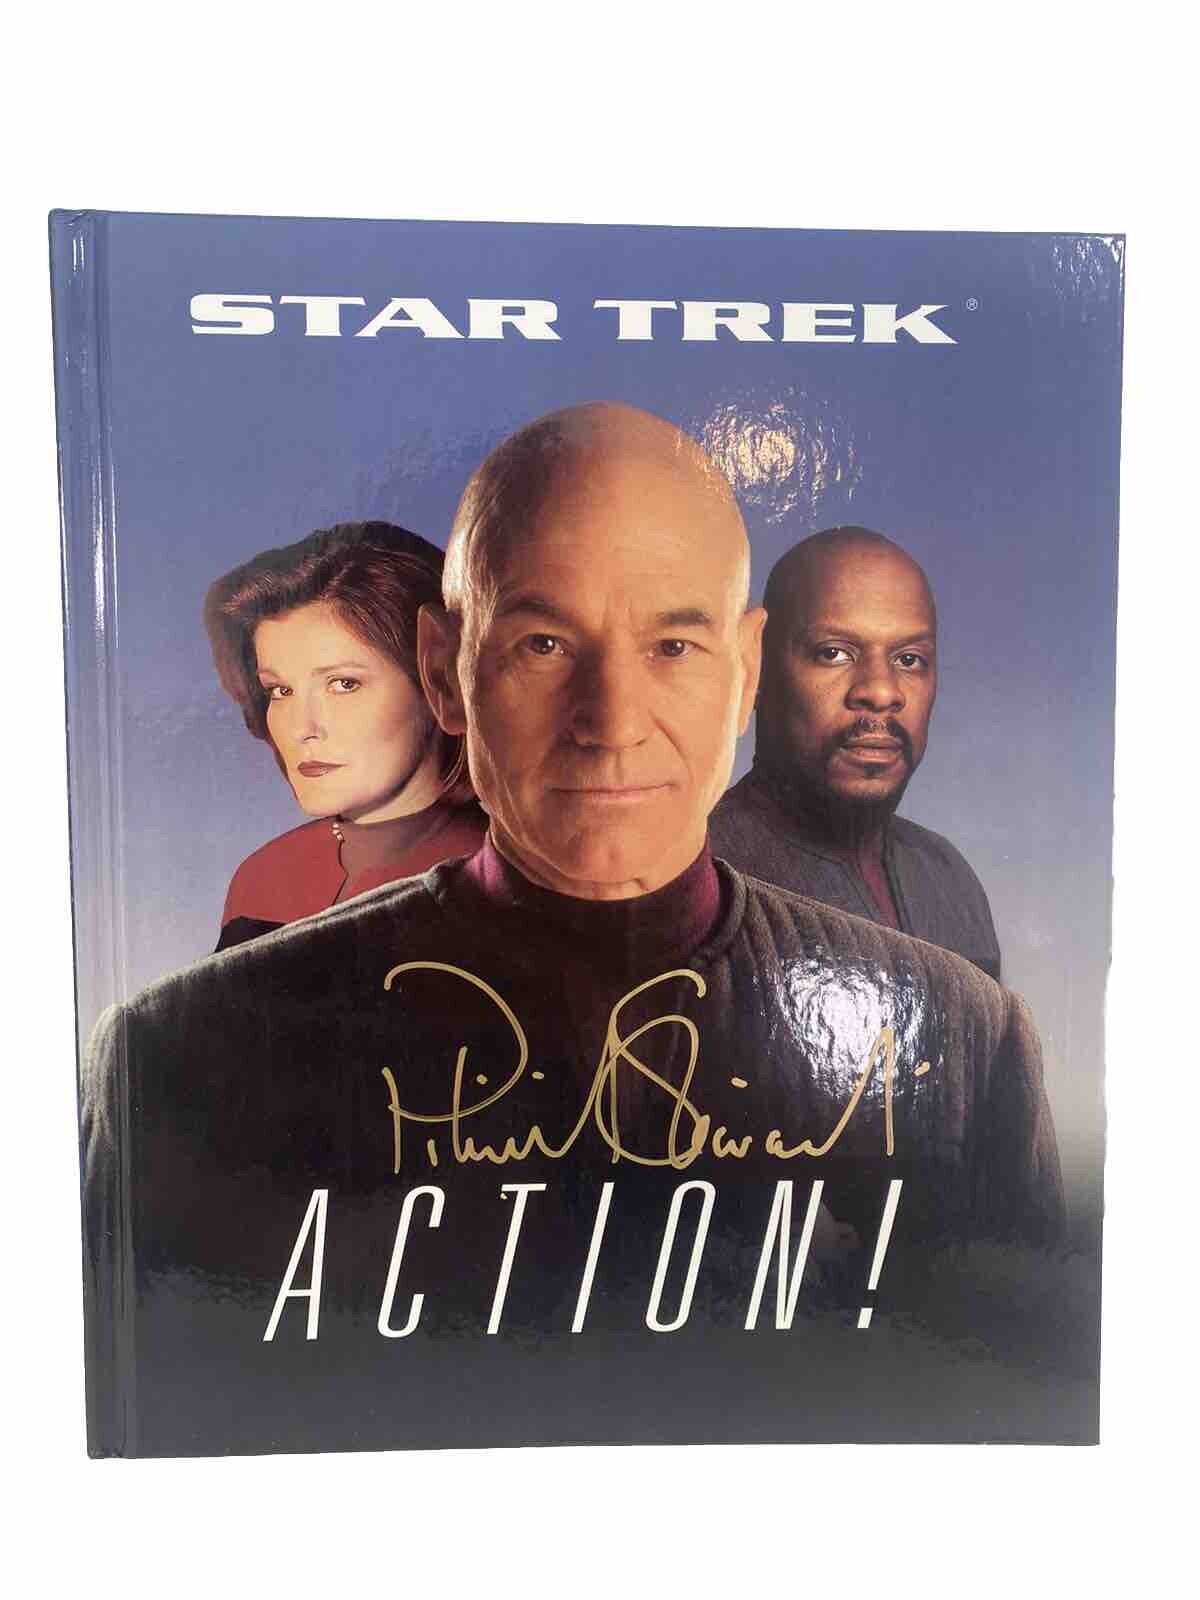 SIGNED PATRICK STEWART IN GOLD 1998 Star Trek Action 1st Edition HC Book COA